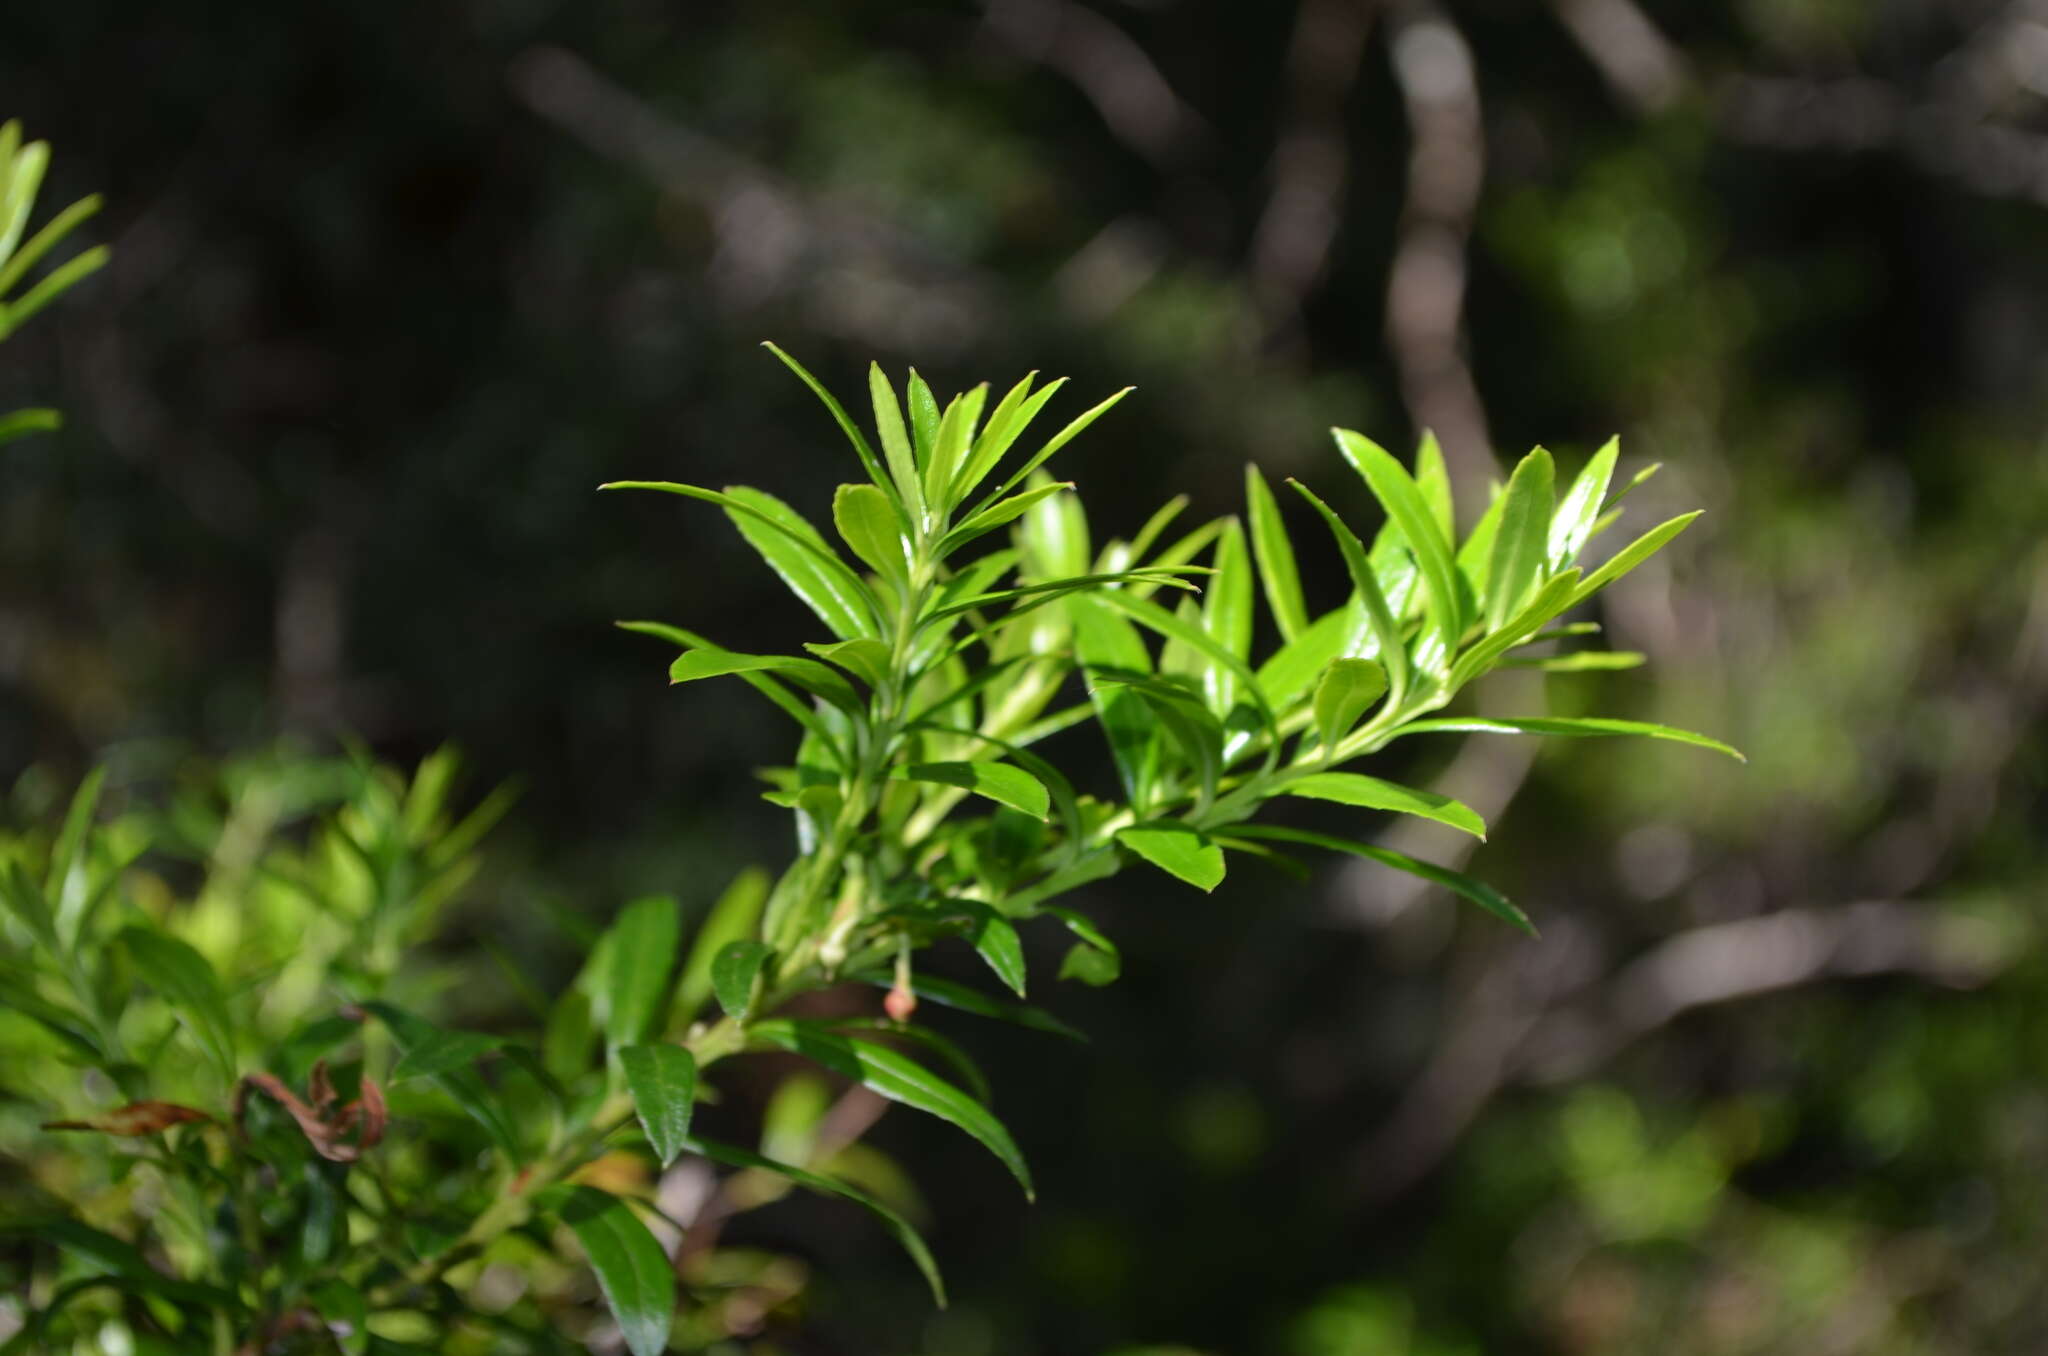 Image of Gaultheria tenuifolia (R. Phil.) Sleum.